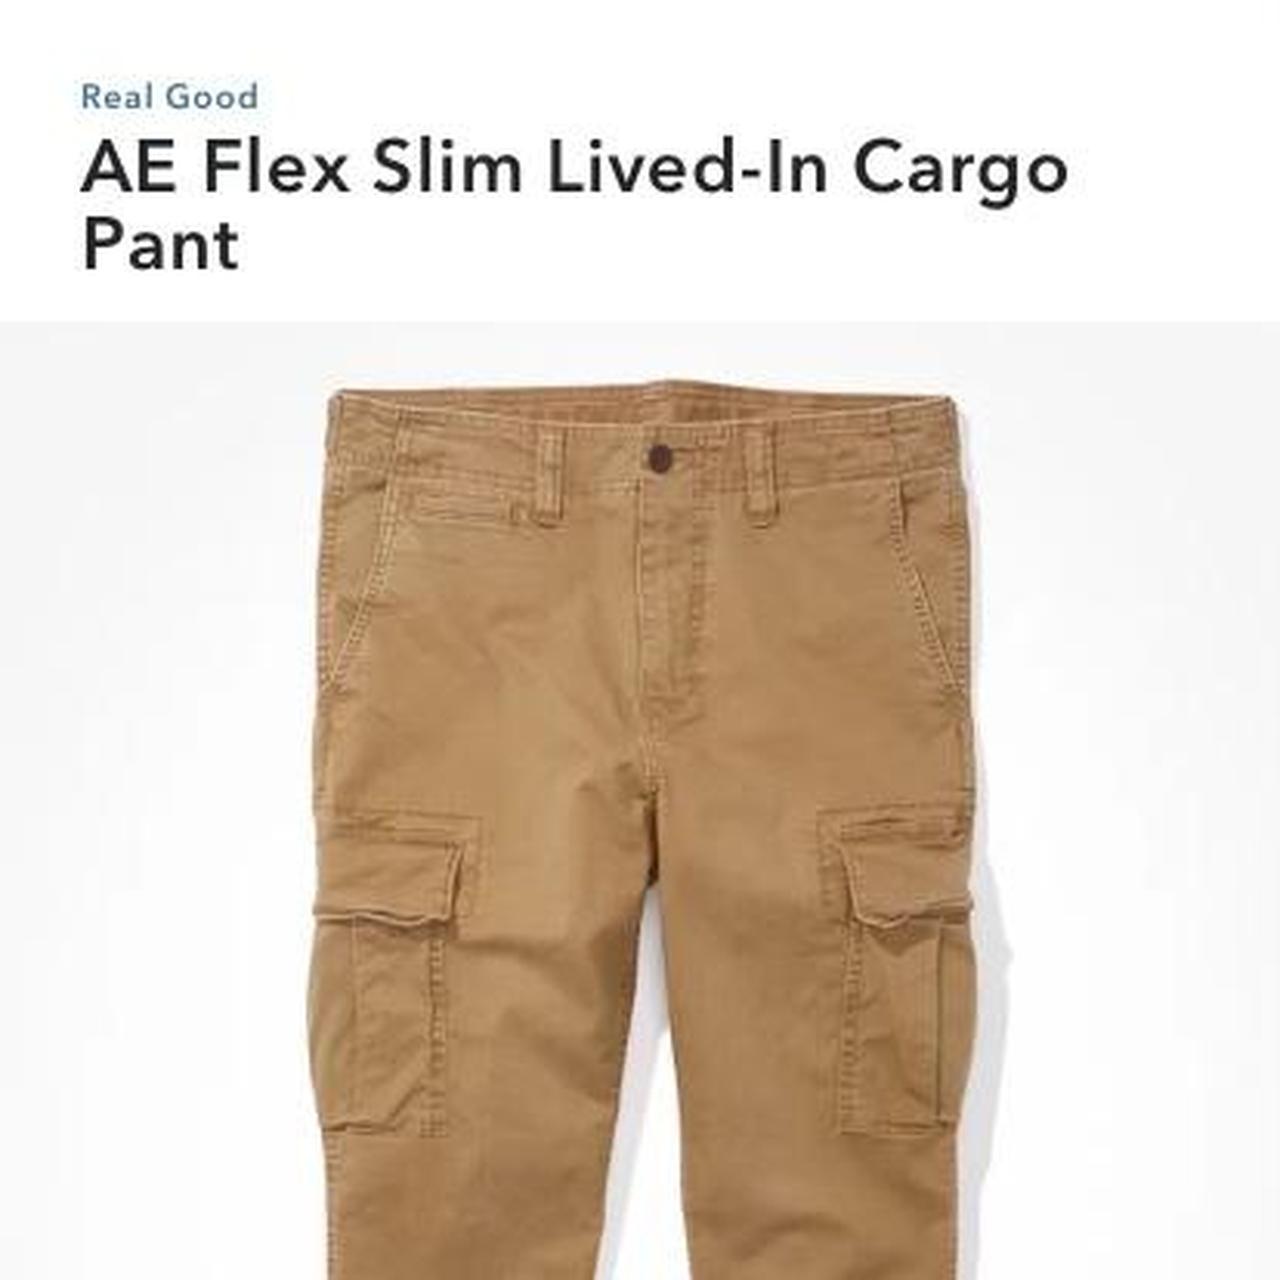 American Eagle Flex Slim Lived In Cargo Pants, Pants